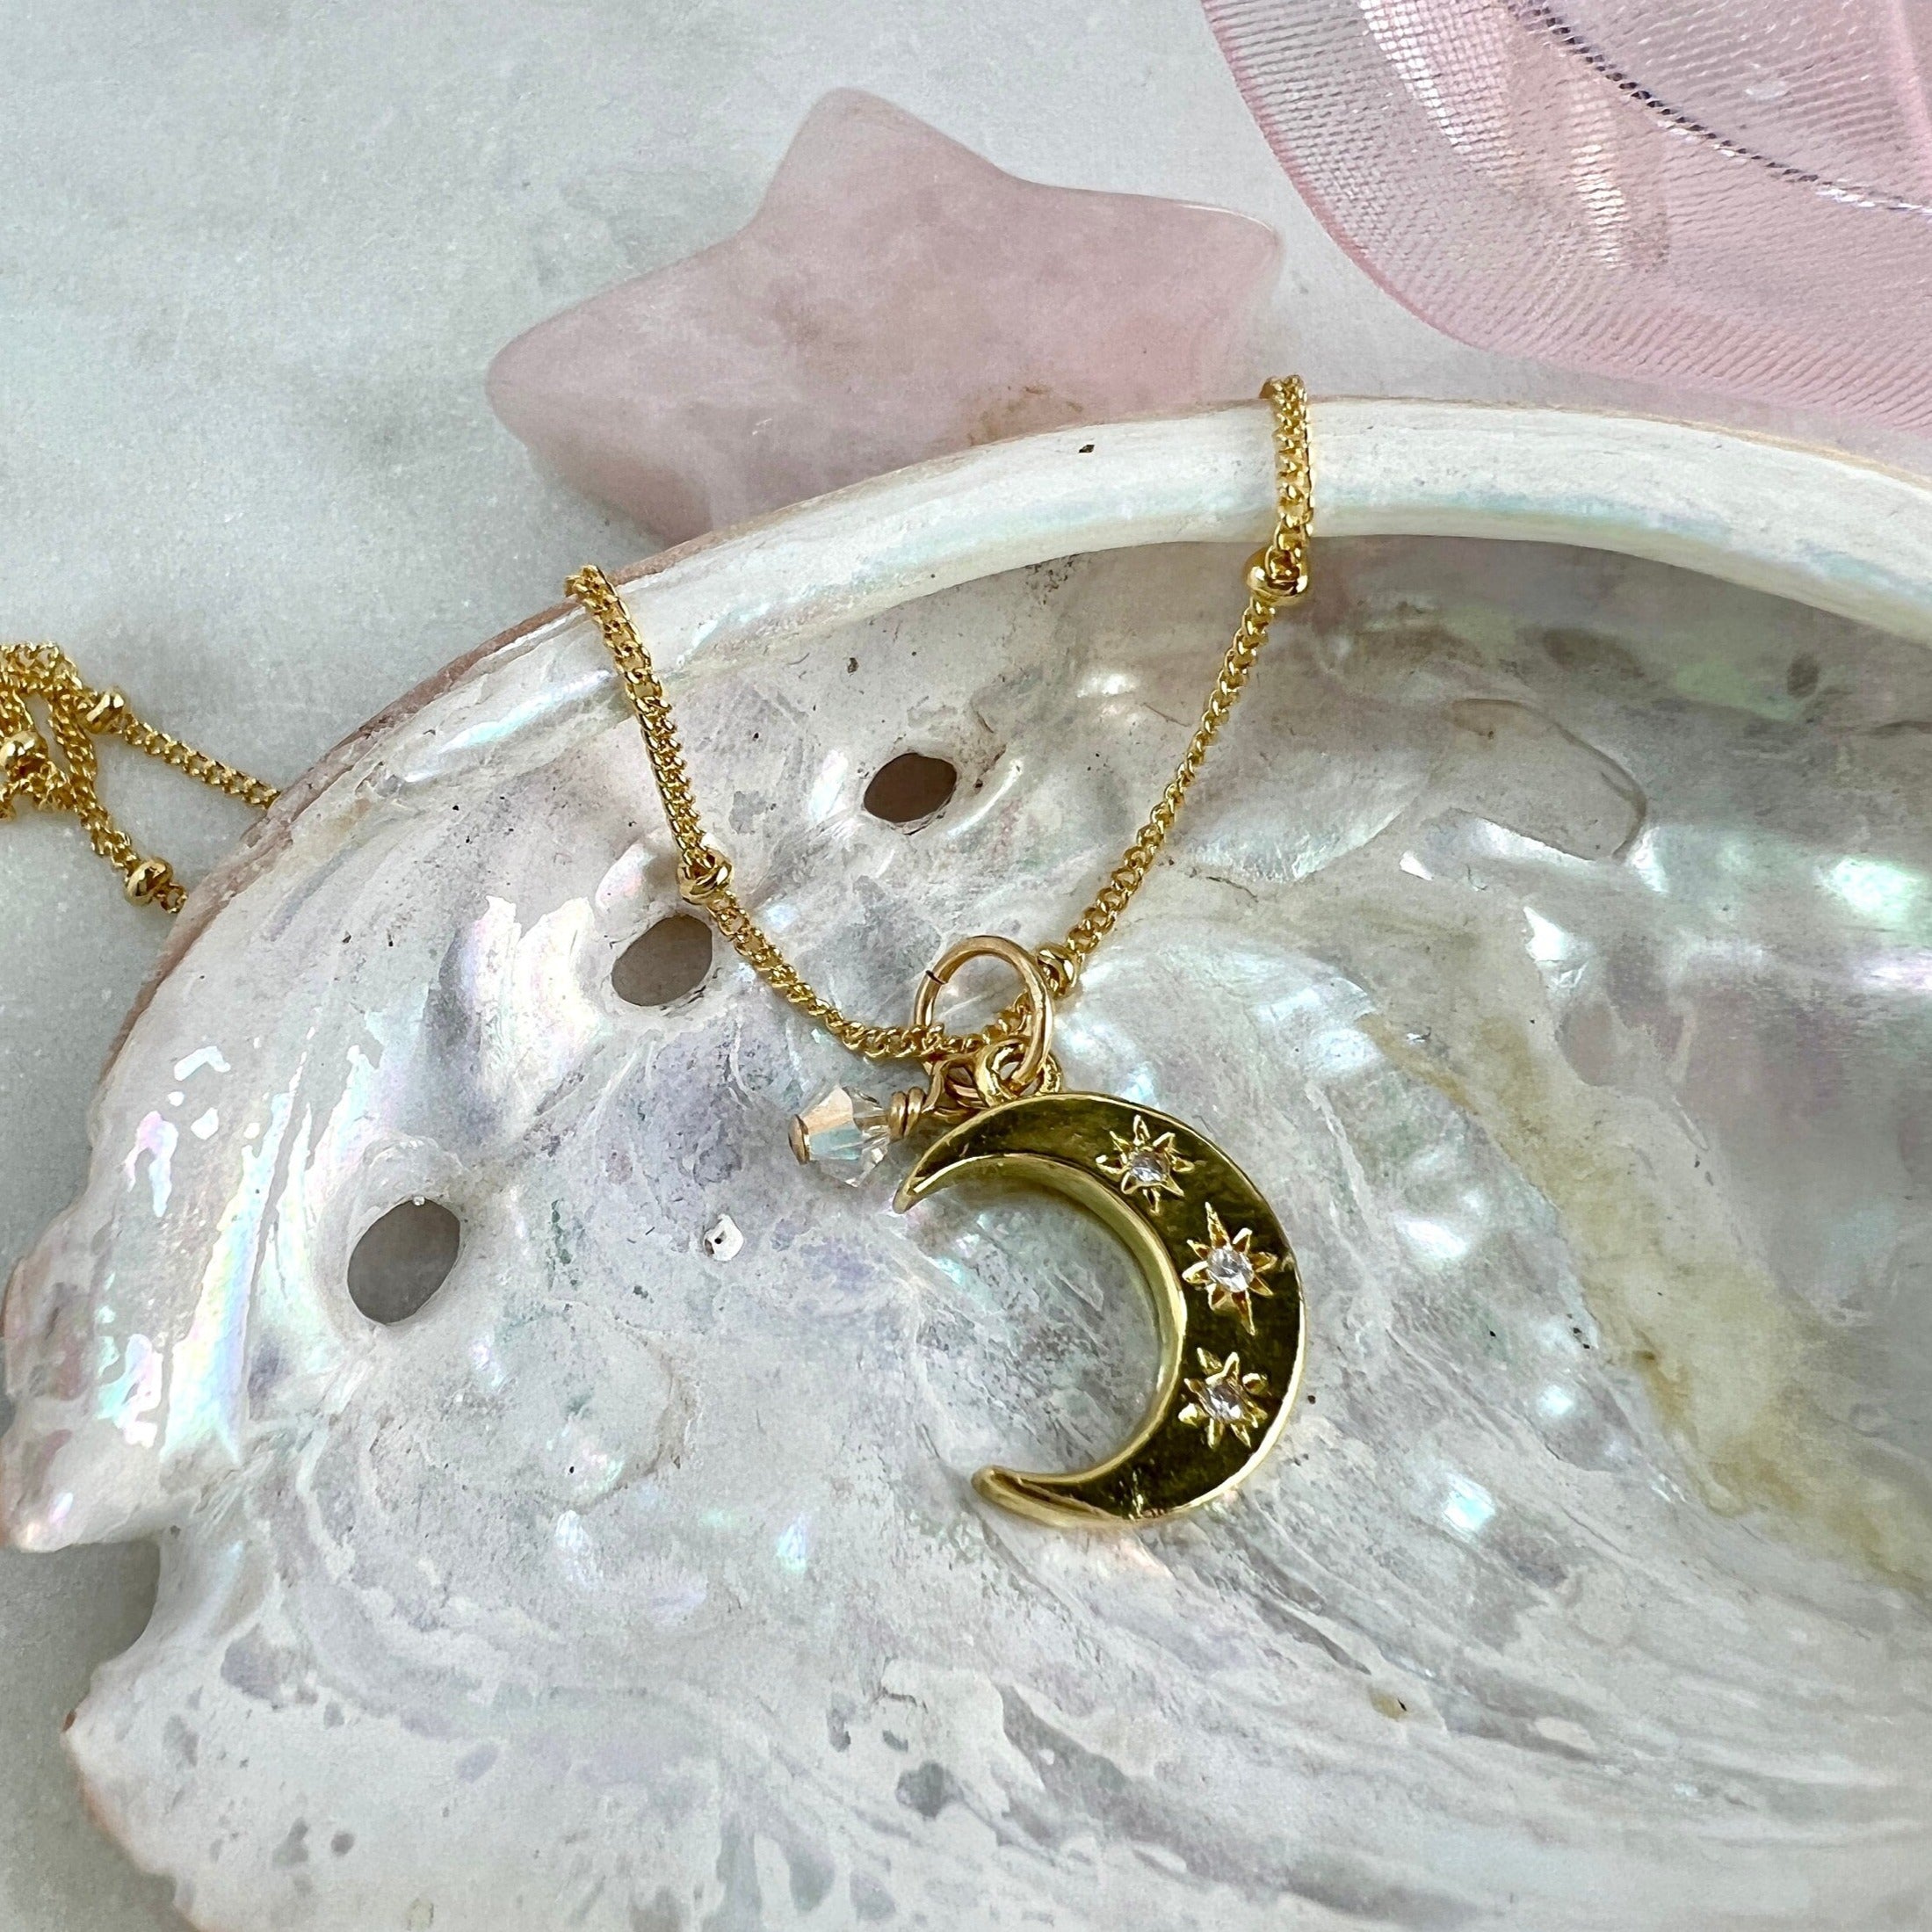 Swarovski Crystal Silver Moon Necklace By La Belle et la Bete |  notonthehighstreet.com